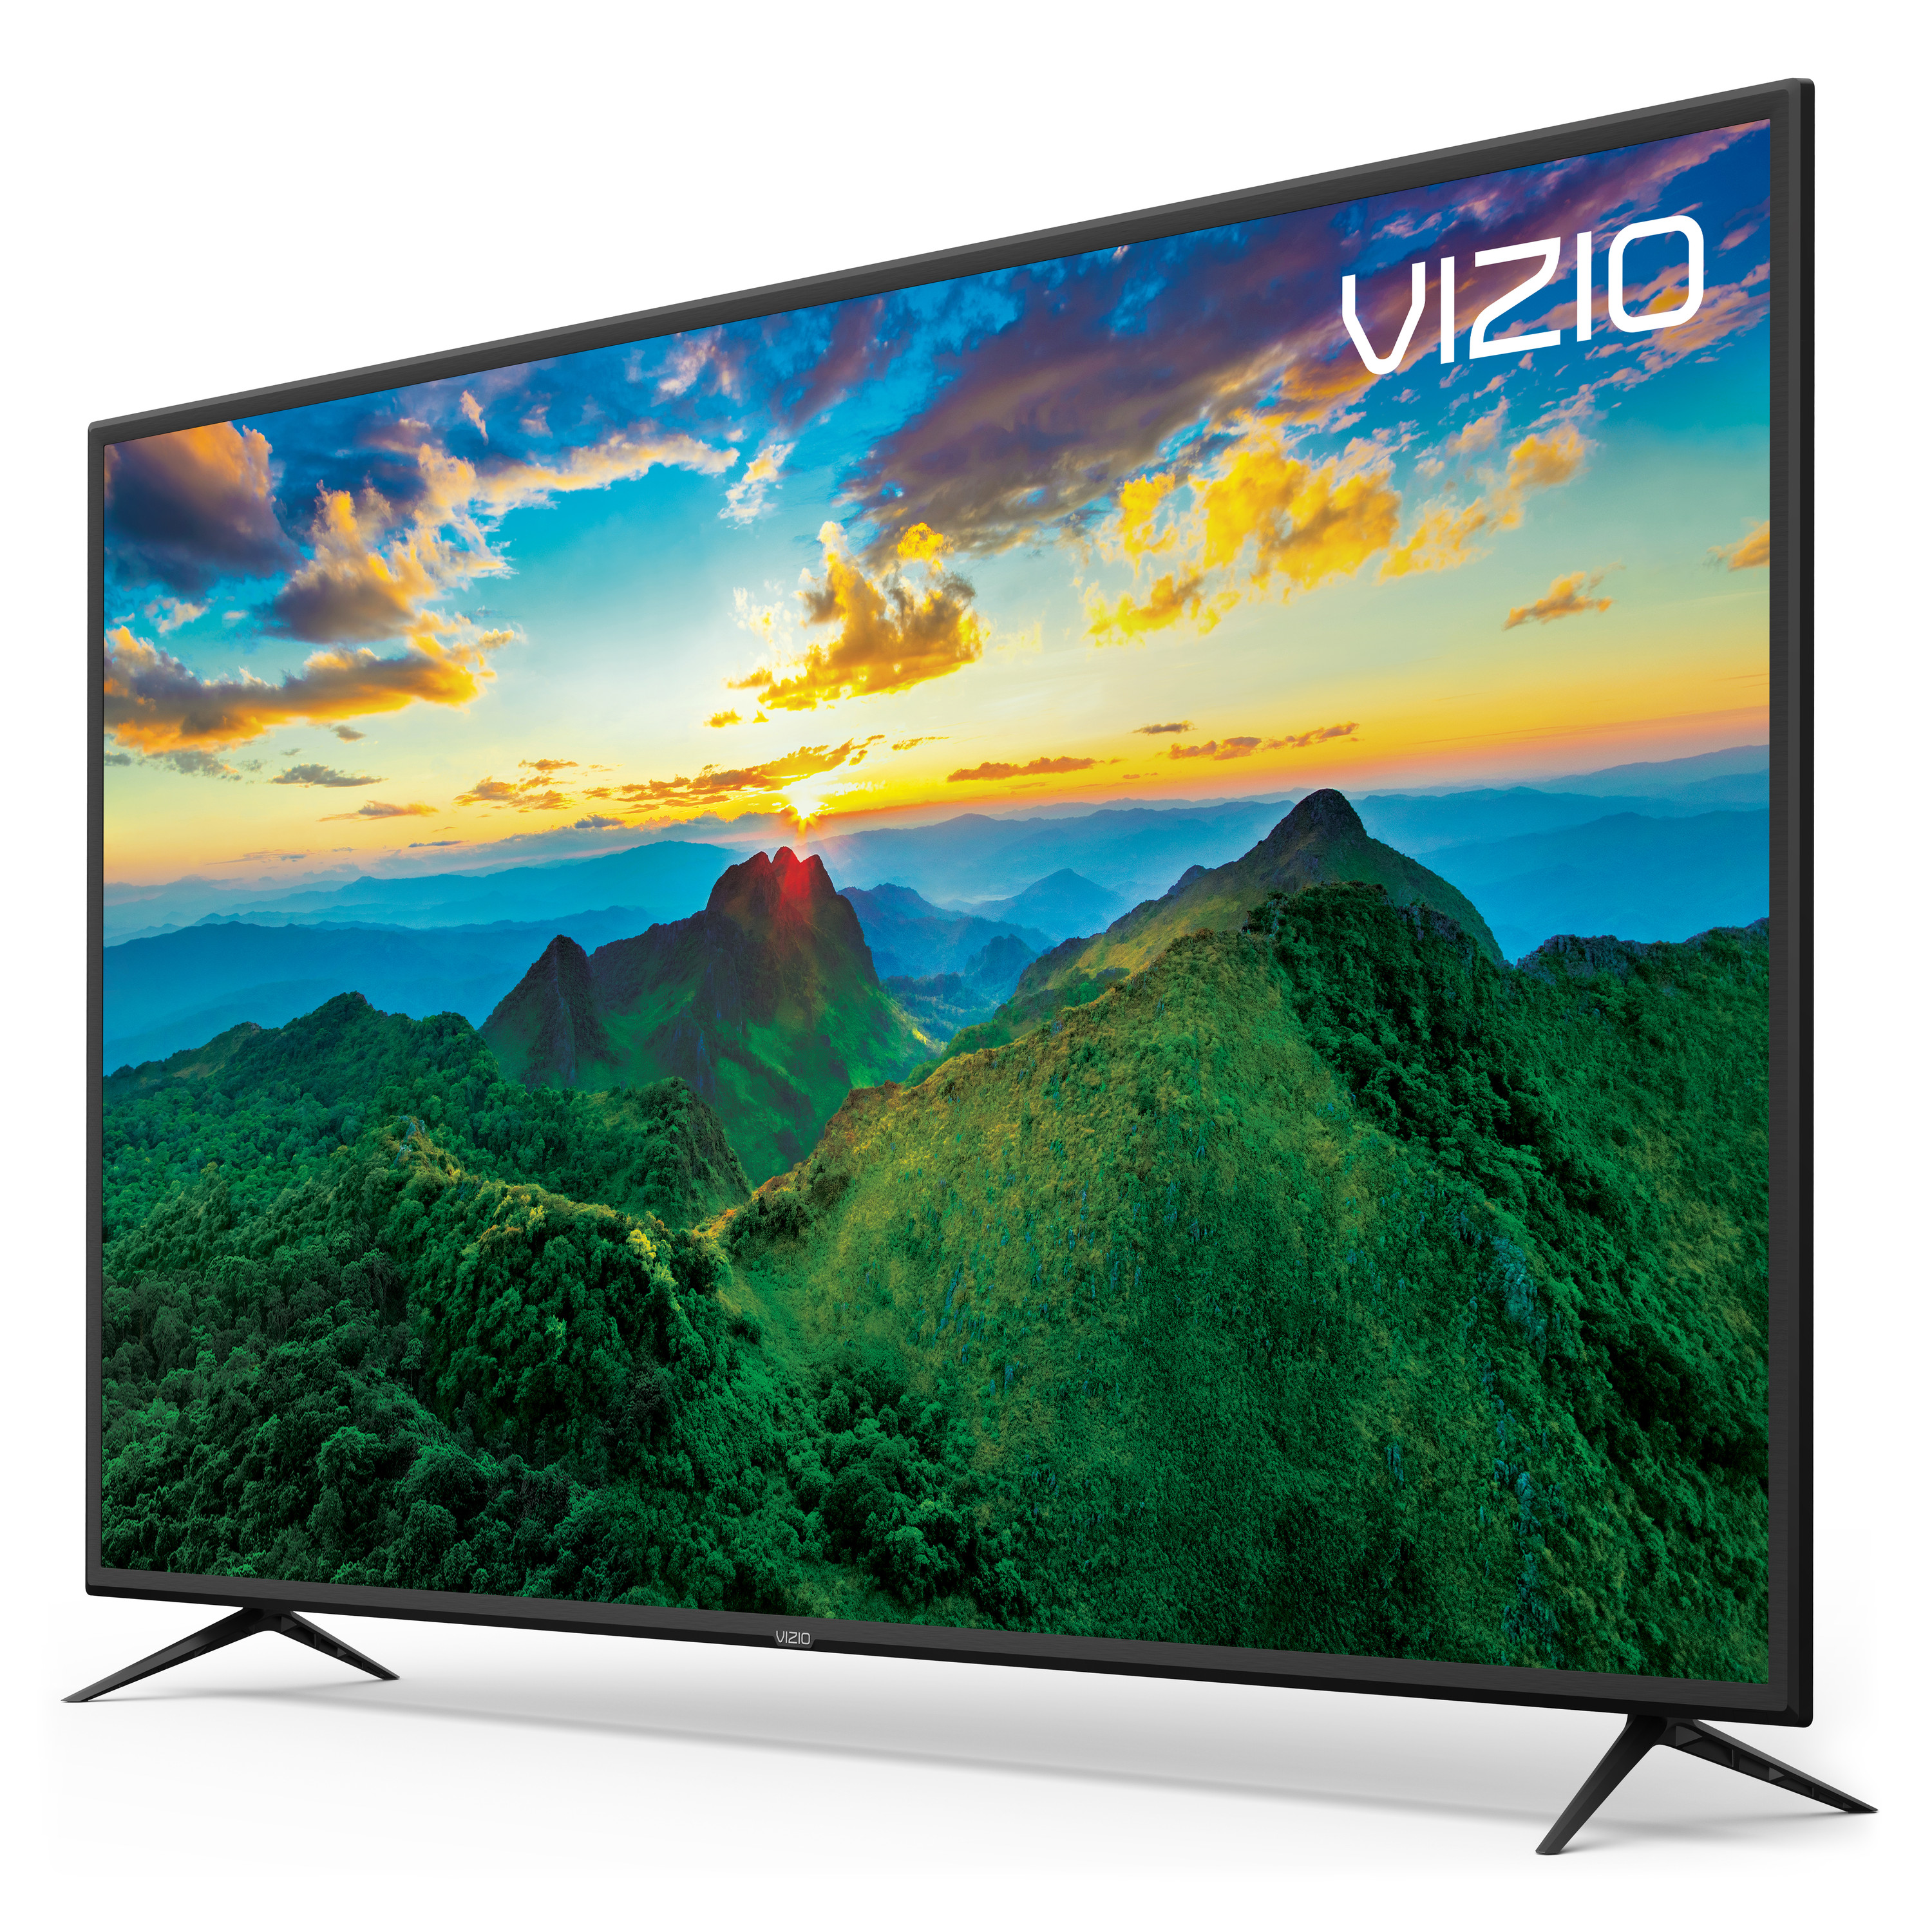 VIZIO 70" Class D-Series 4K (2160P) Ultra HD HDR Smart LED TV (D70-F3) (2018 Model) - image 5 of 13